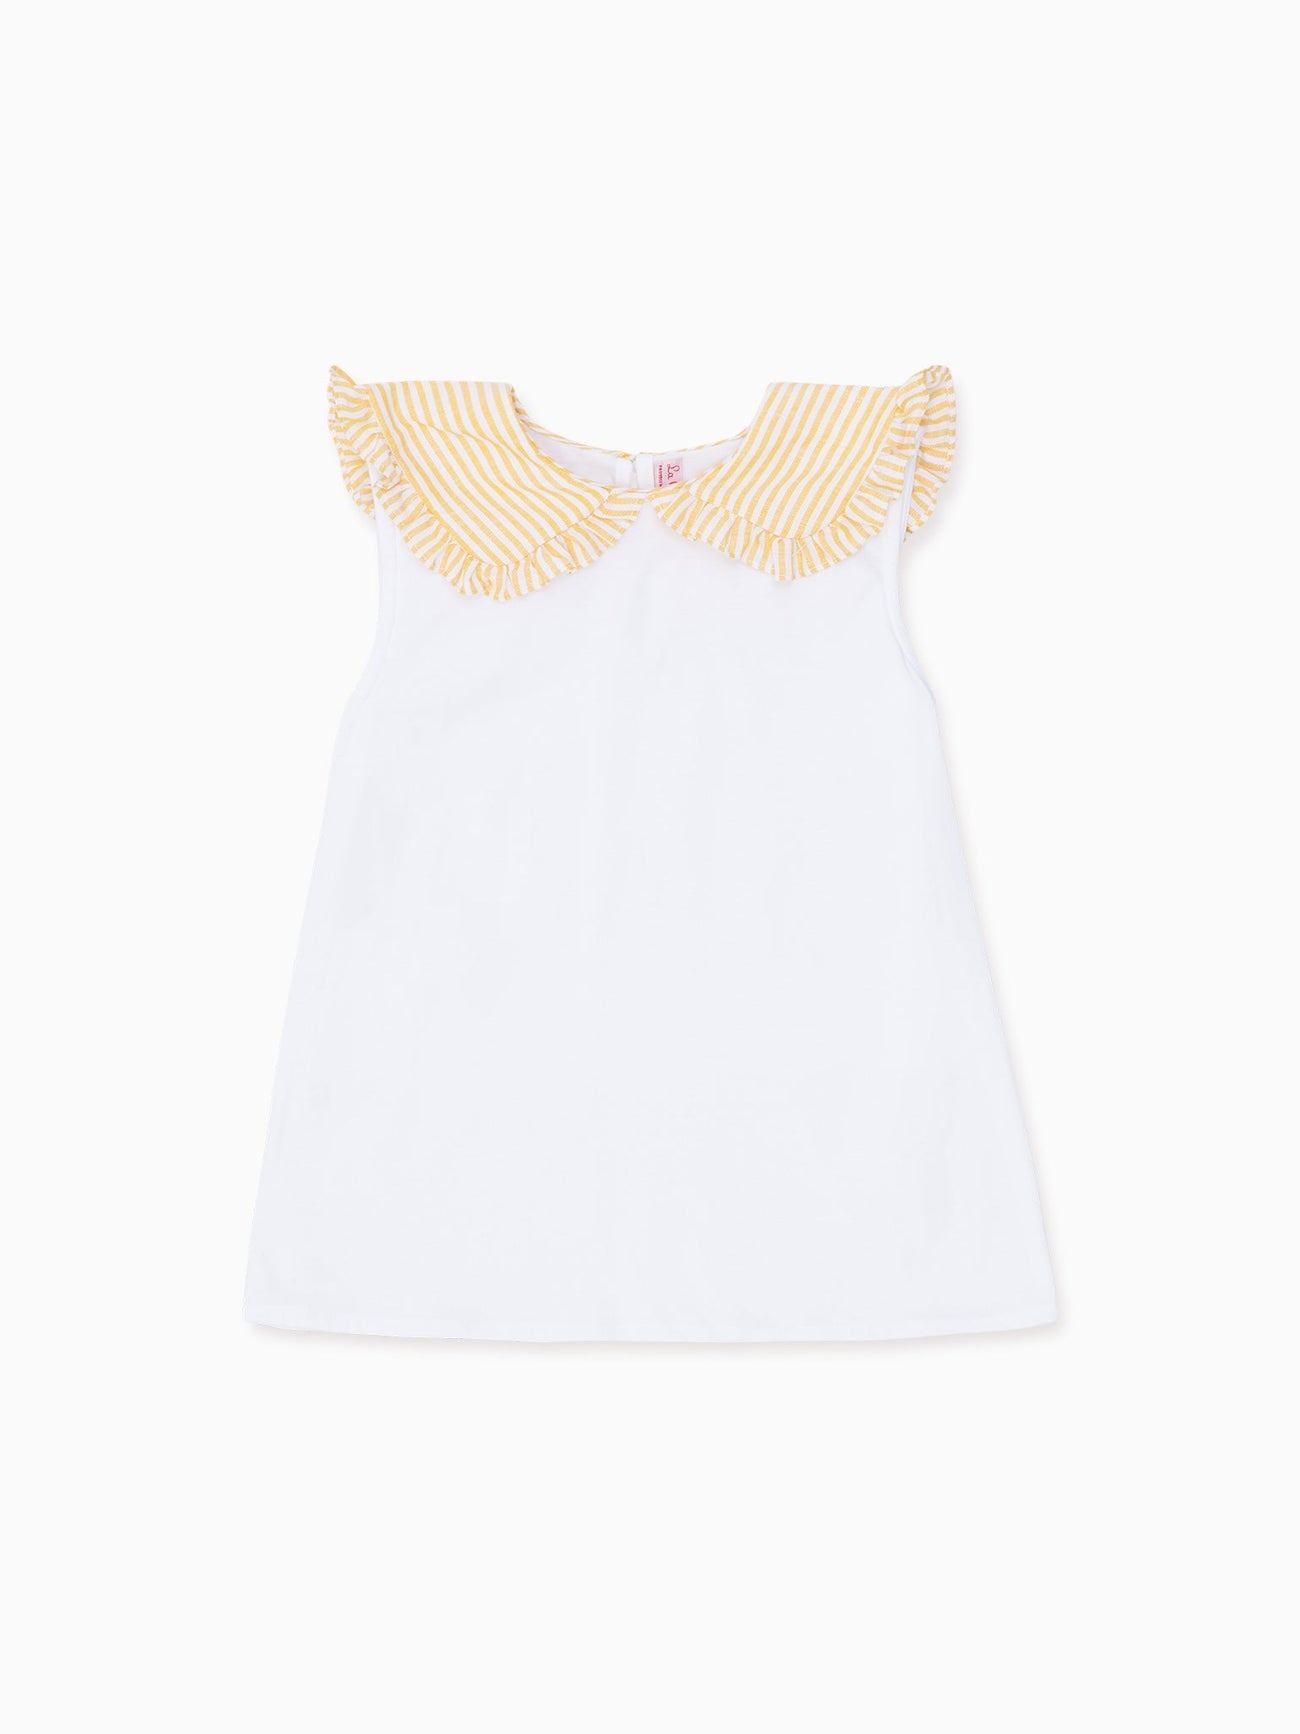 Yellow Stripe Florentina Girl Cotton Top